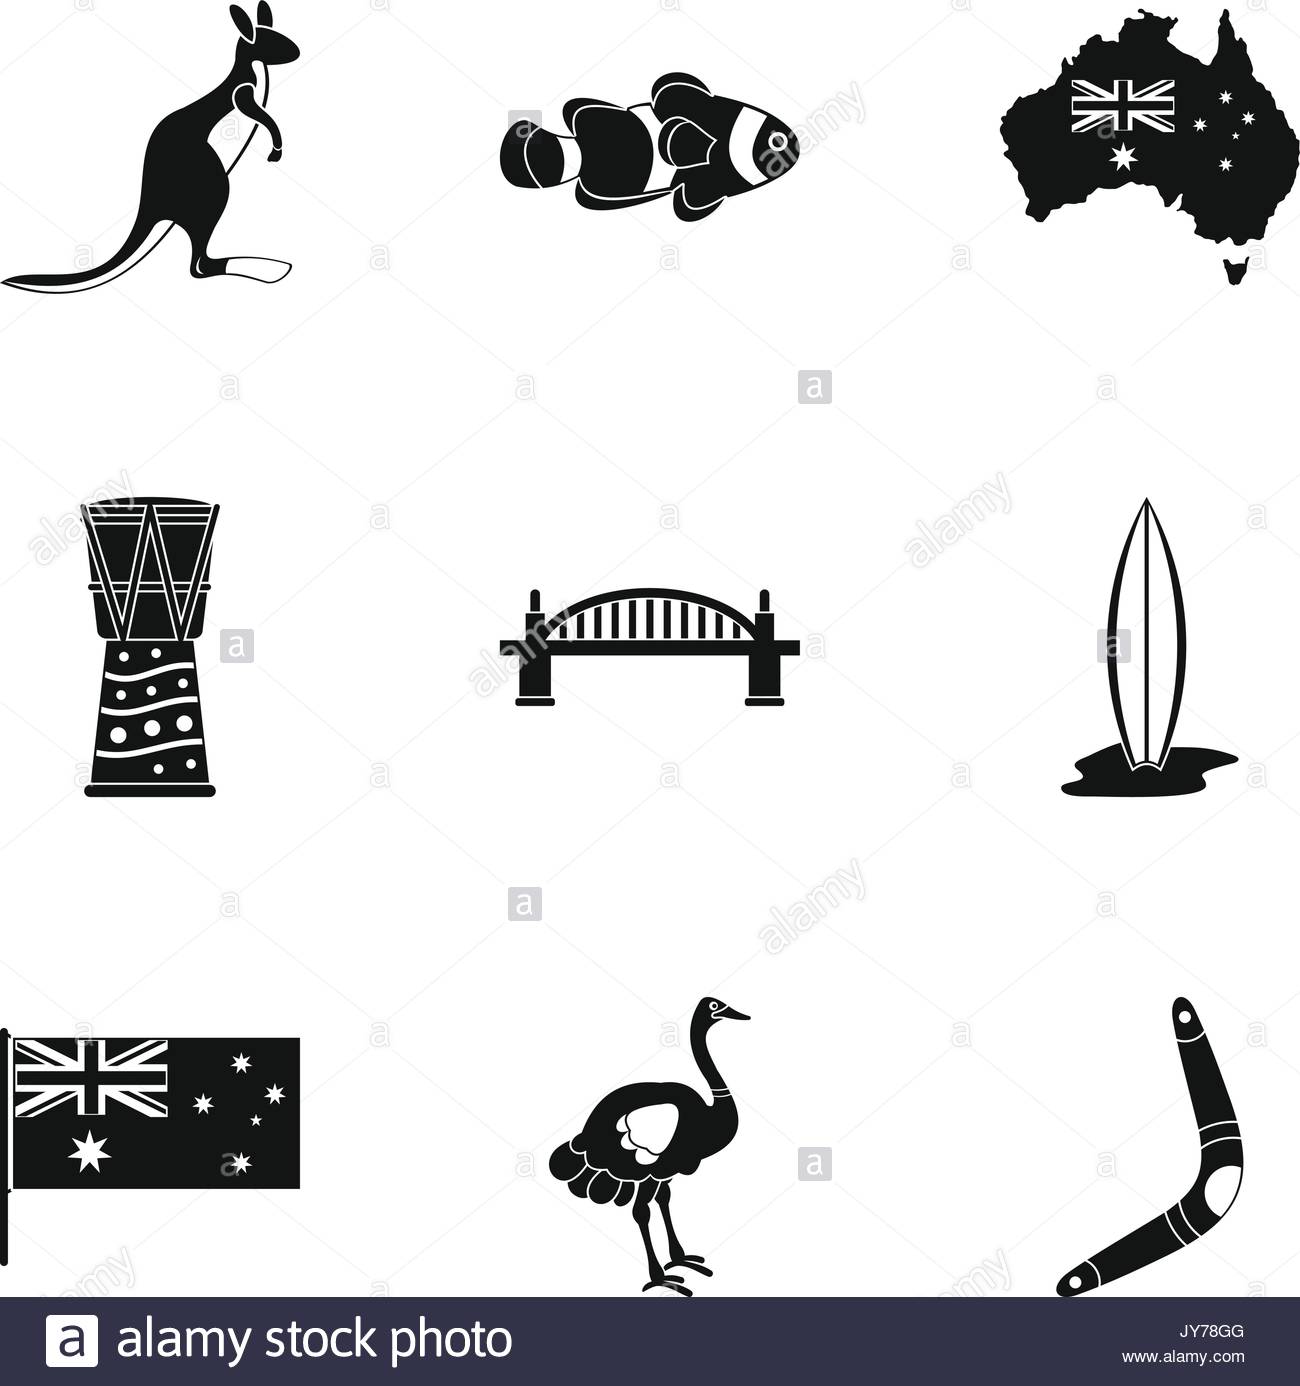 Australia icons | Noun Project